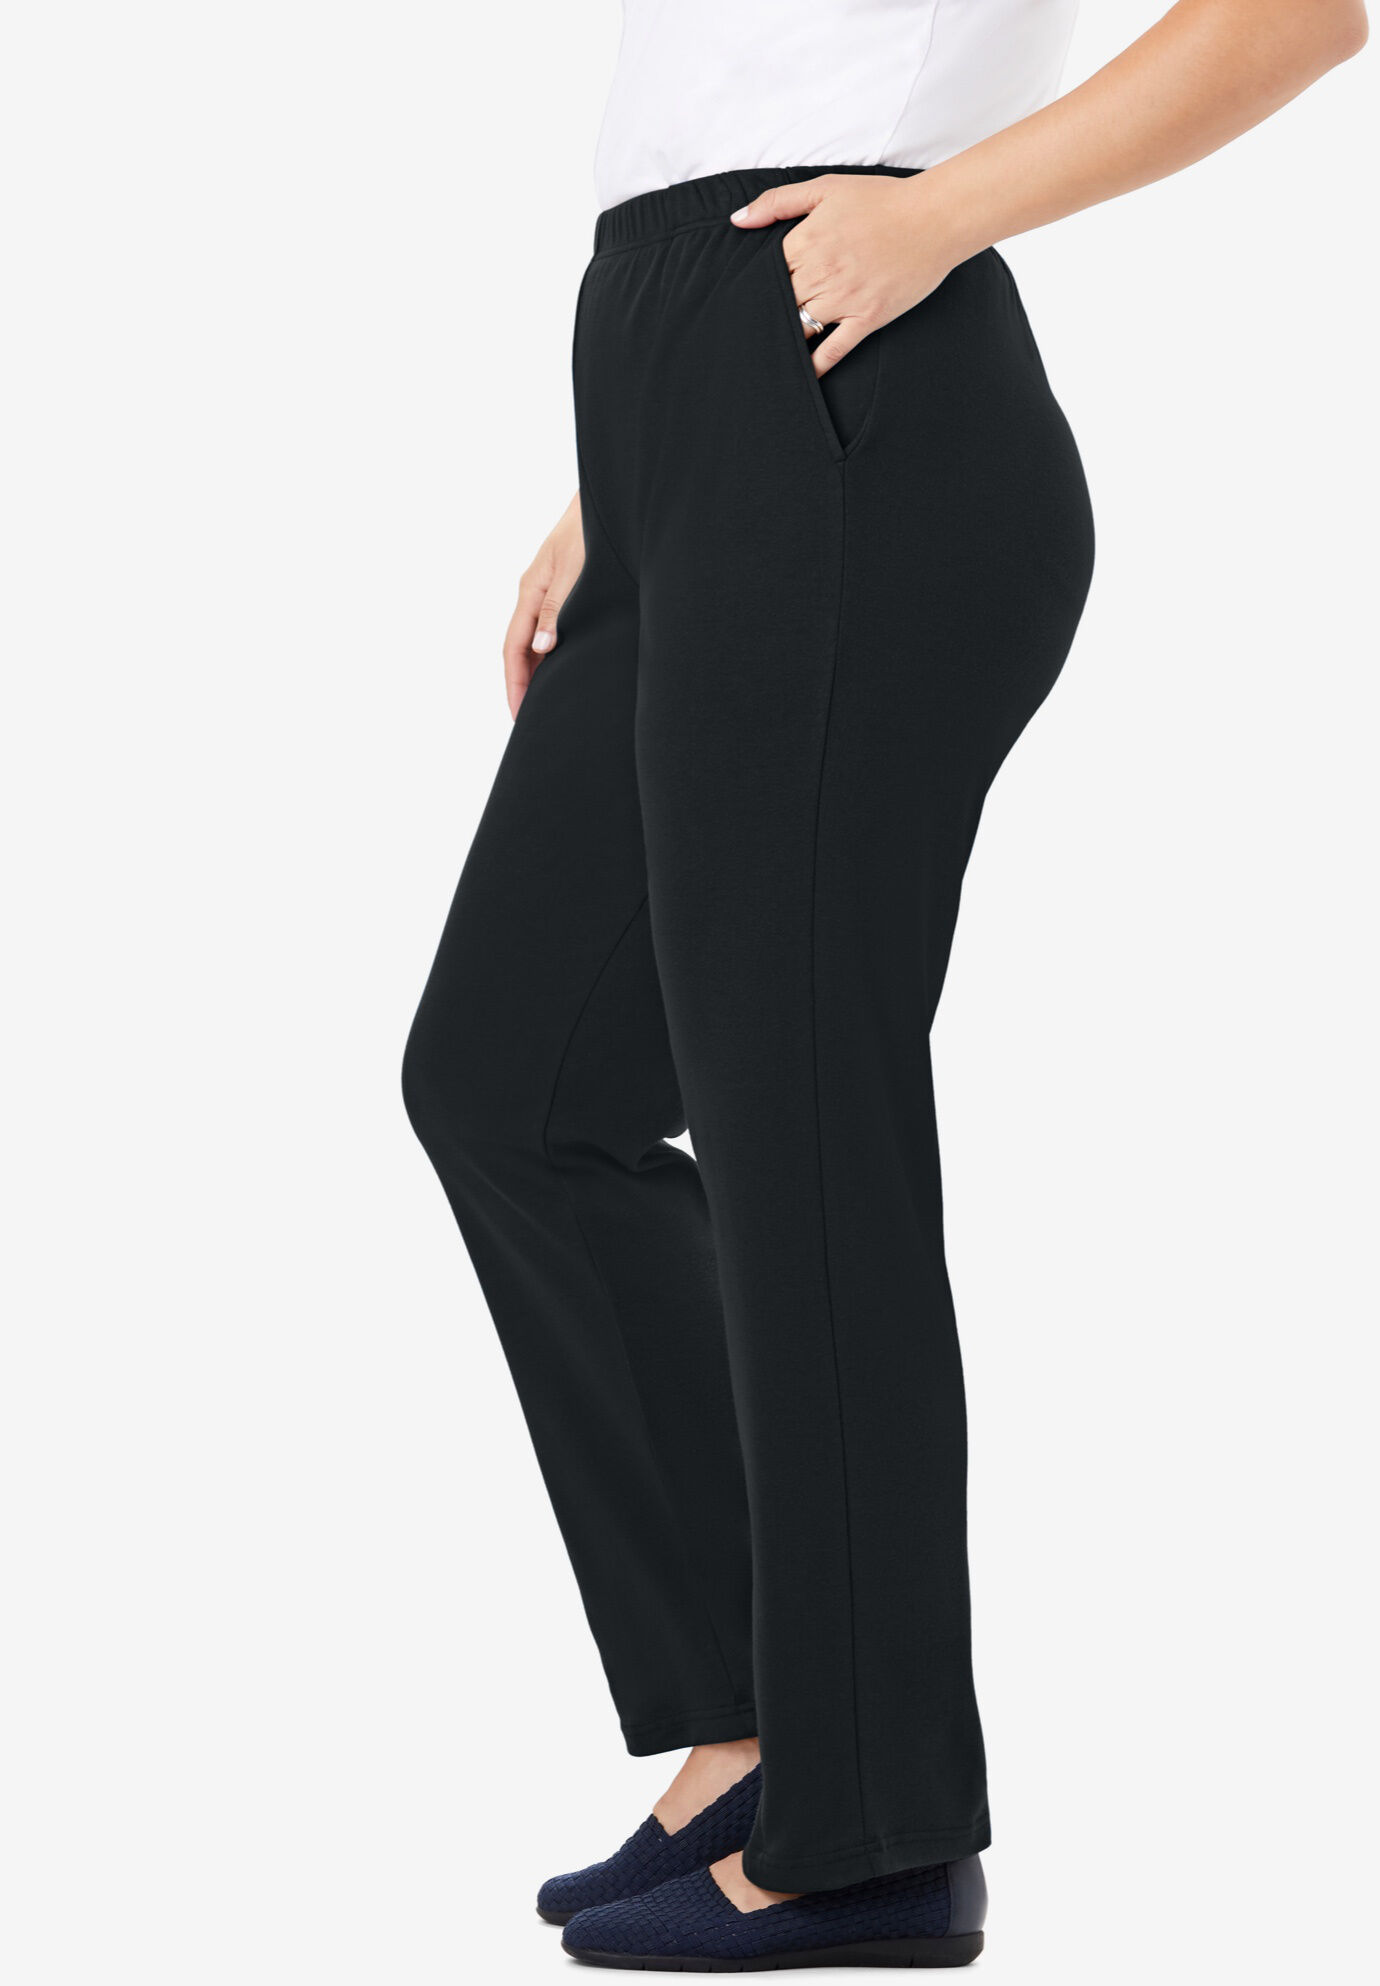 LEG-72 {Spend The Day} Black One Size Capri Leggings PLUS SIZE 3X – Curvy  Boutique Plus Size Clothing